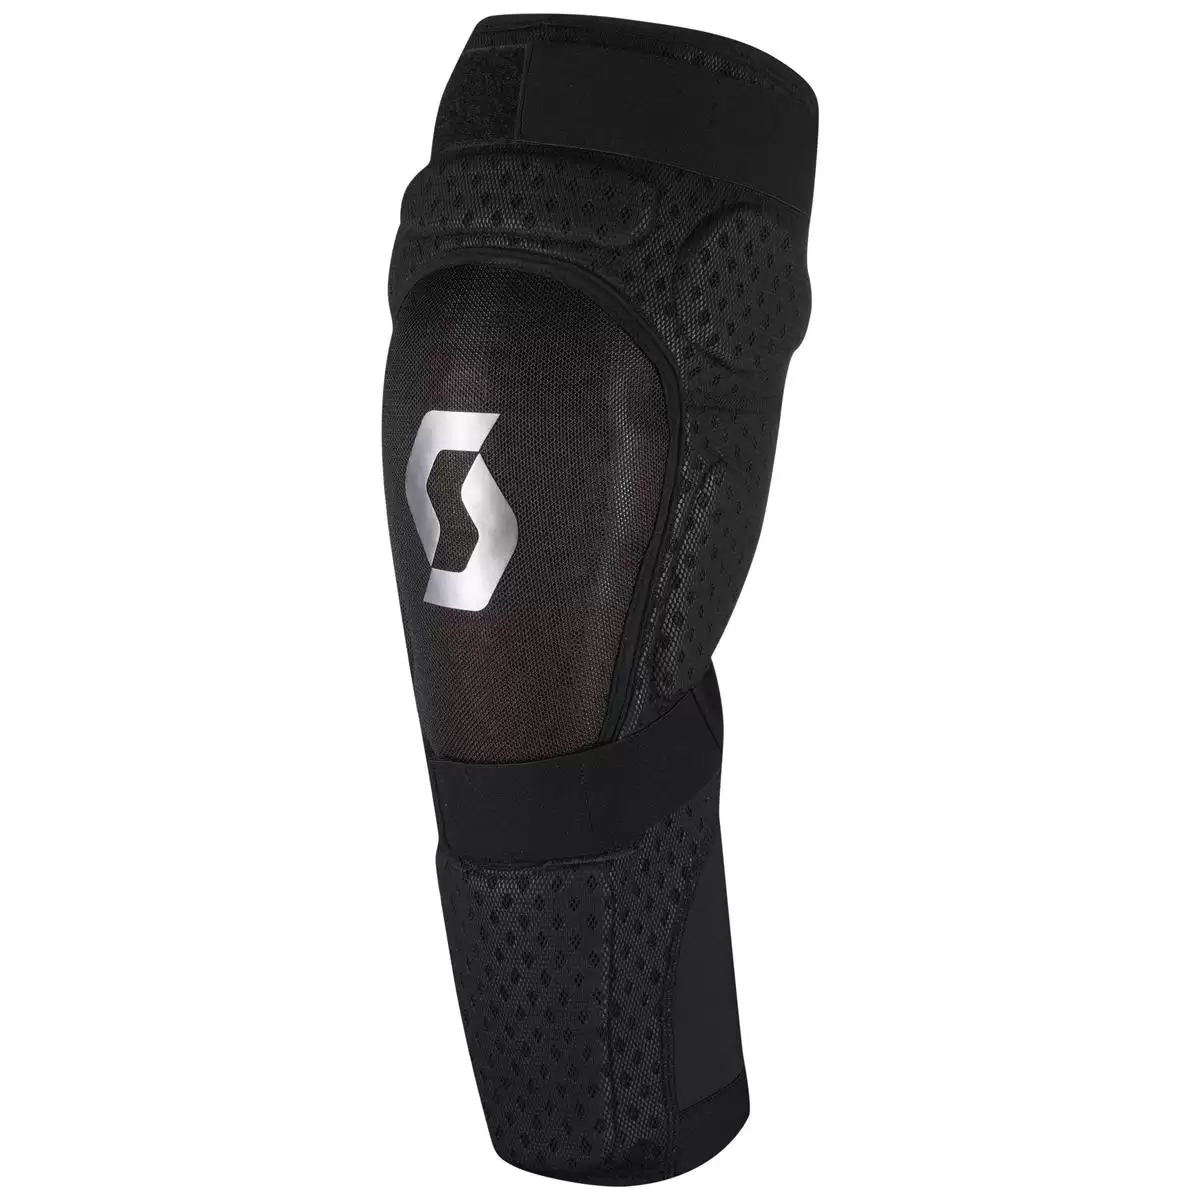 Knee pads Softcon 2 Black/Grey - Size XL - image